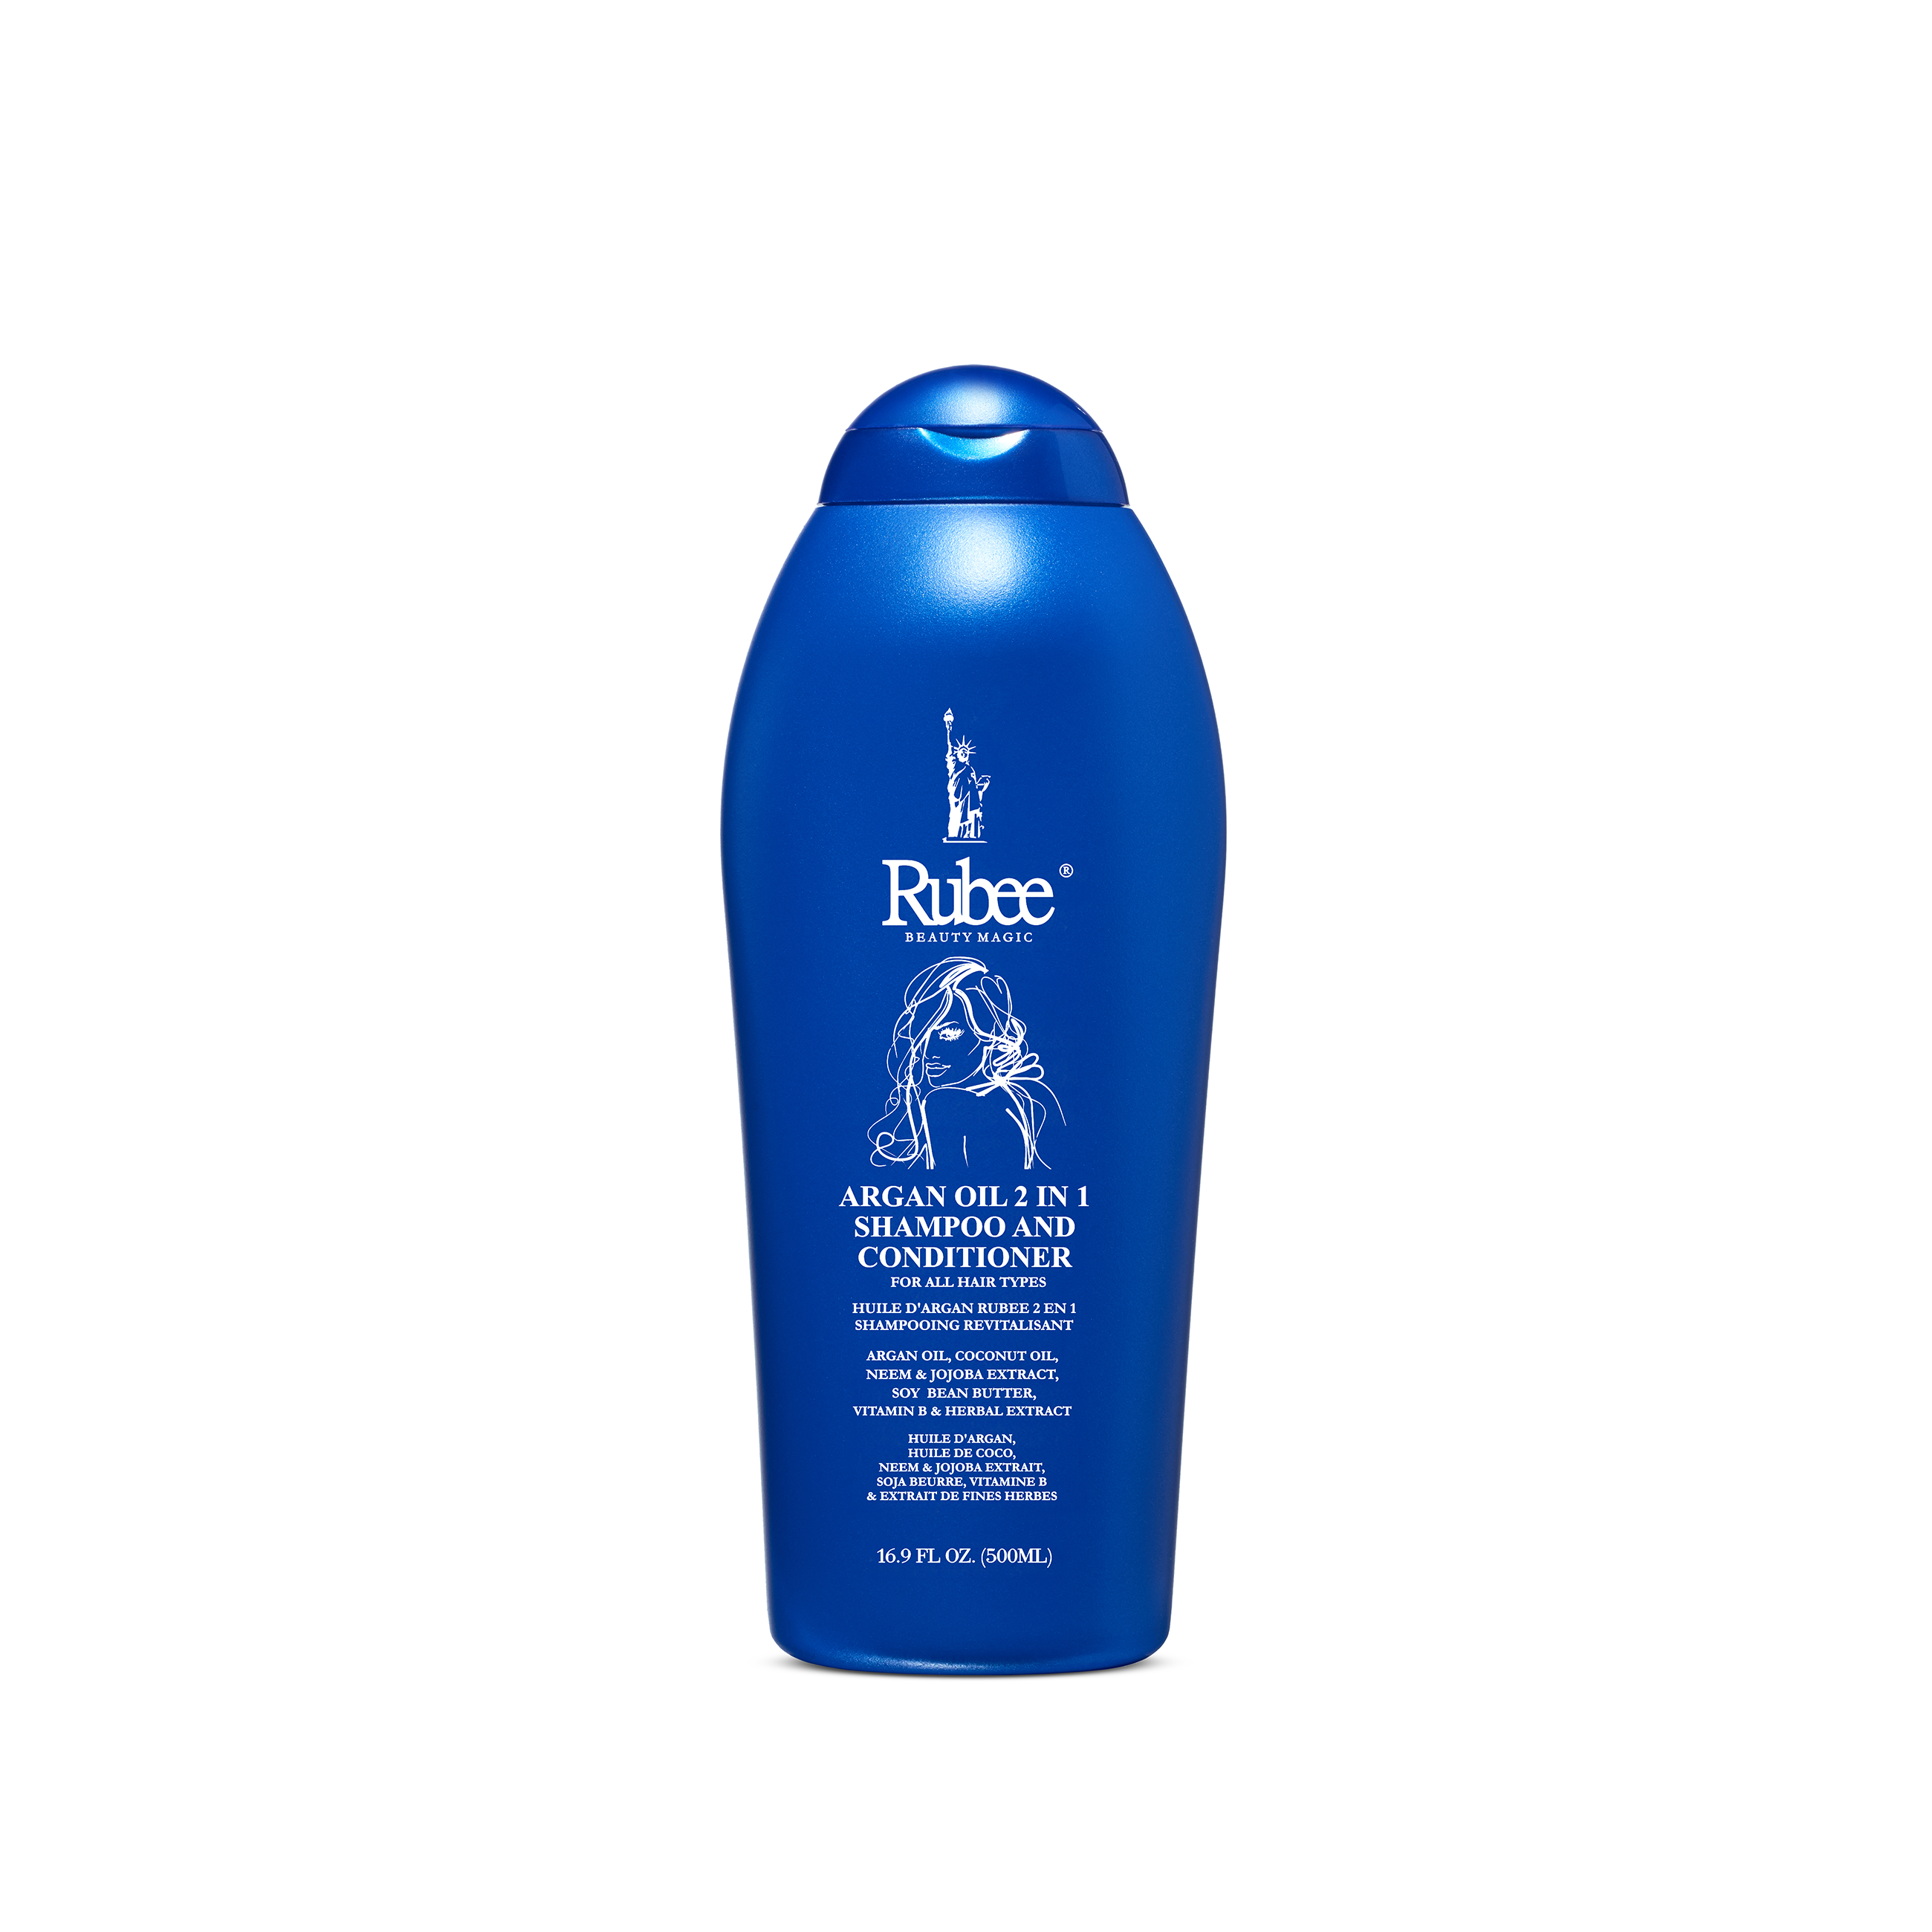 Rubee Argan Oil 2 in 1 Shampoo &amp; Conditioner